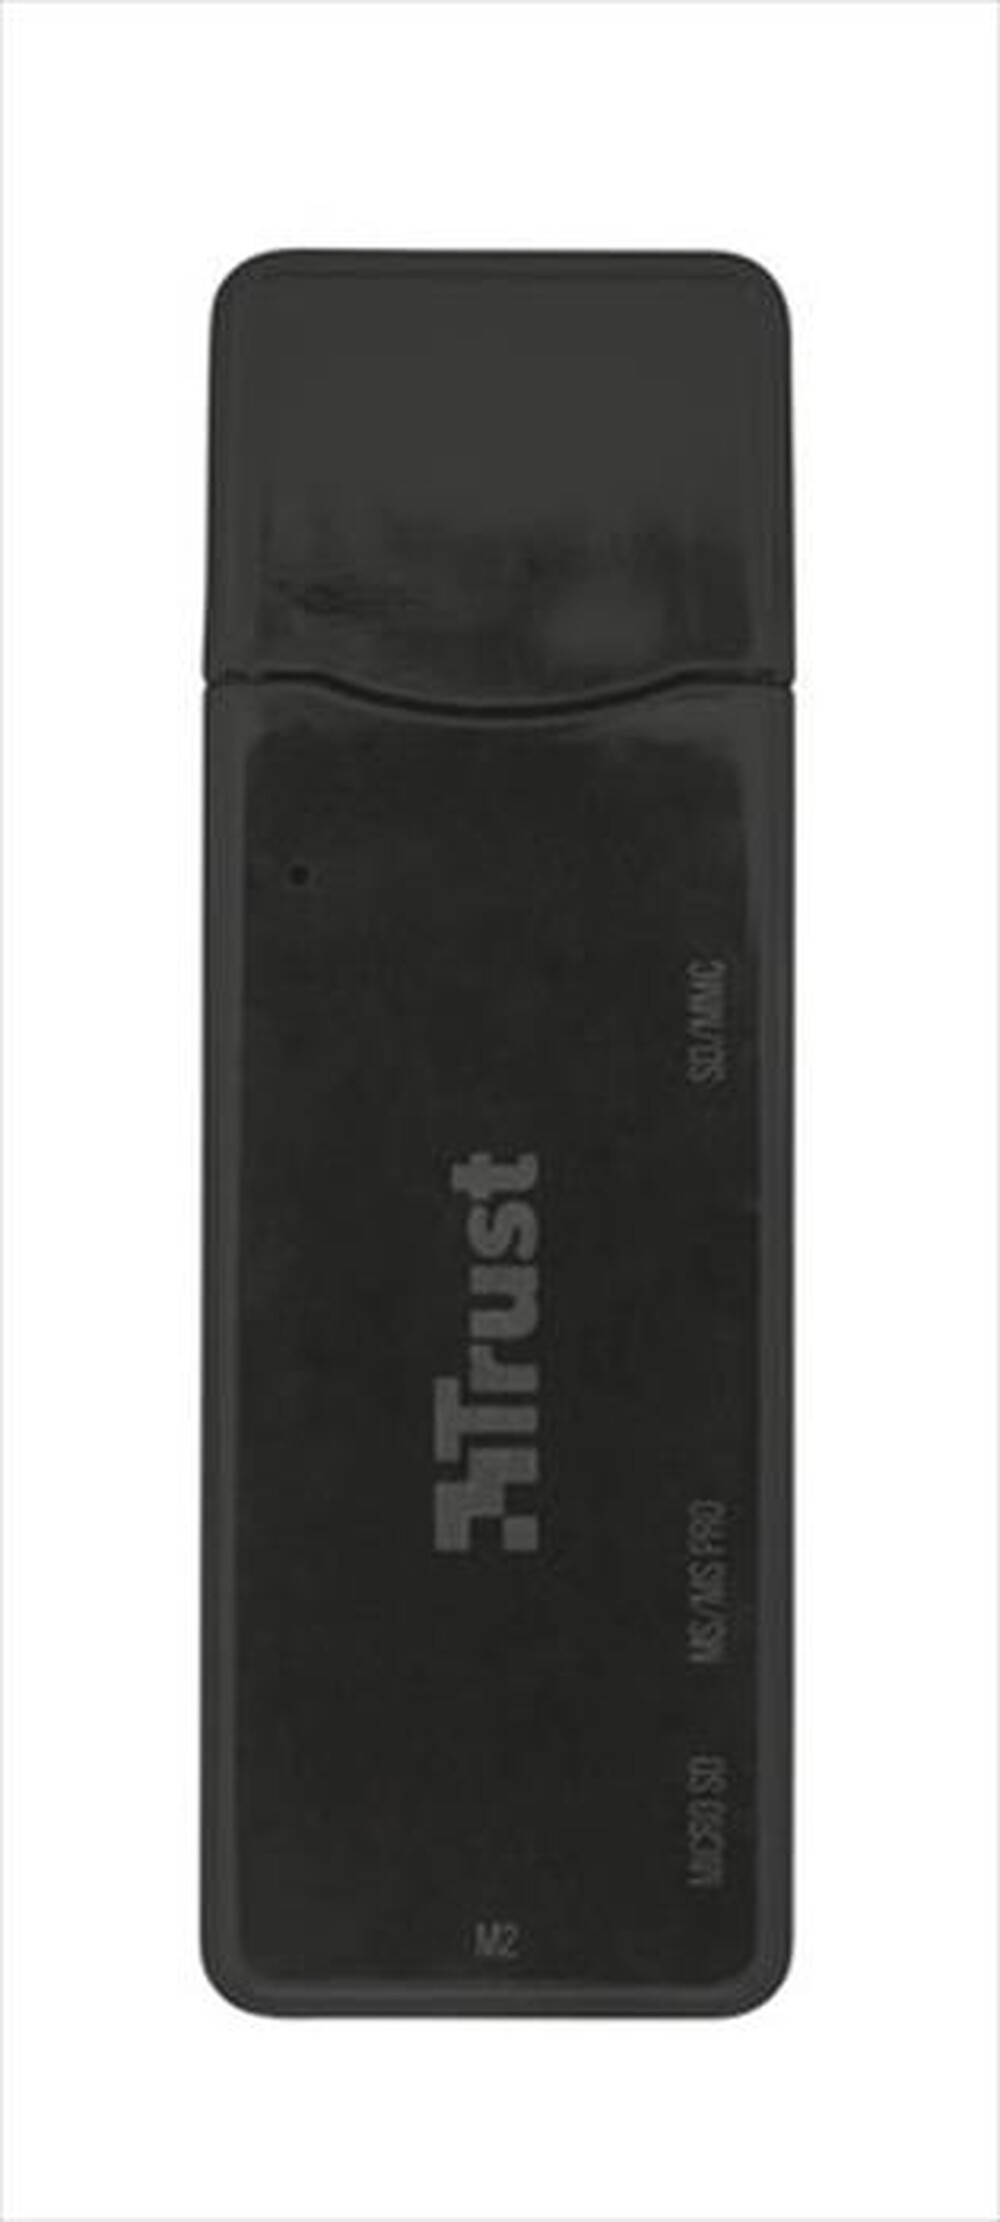 "TRUST - NANGA USB3.1 CARDREADER - Black"